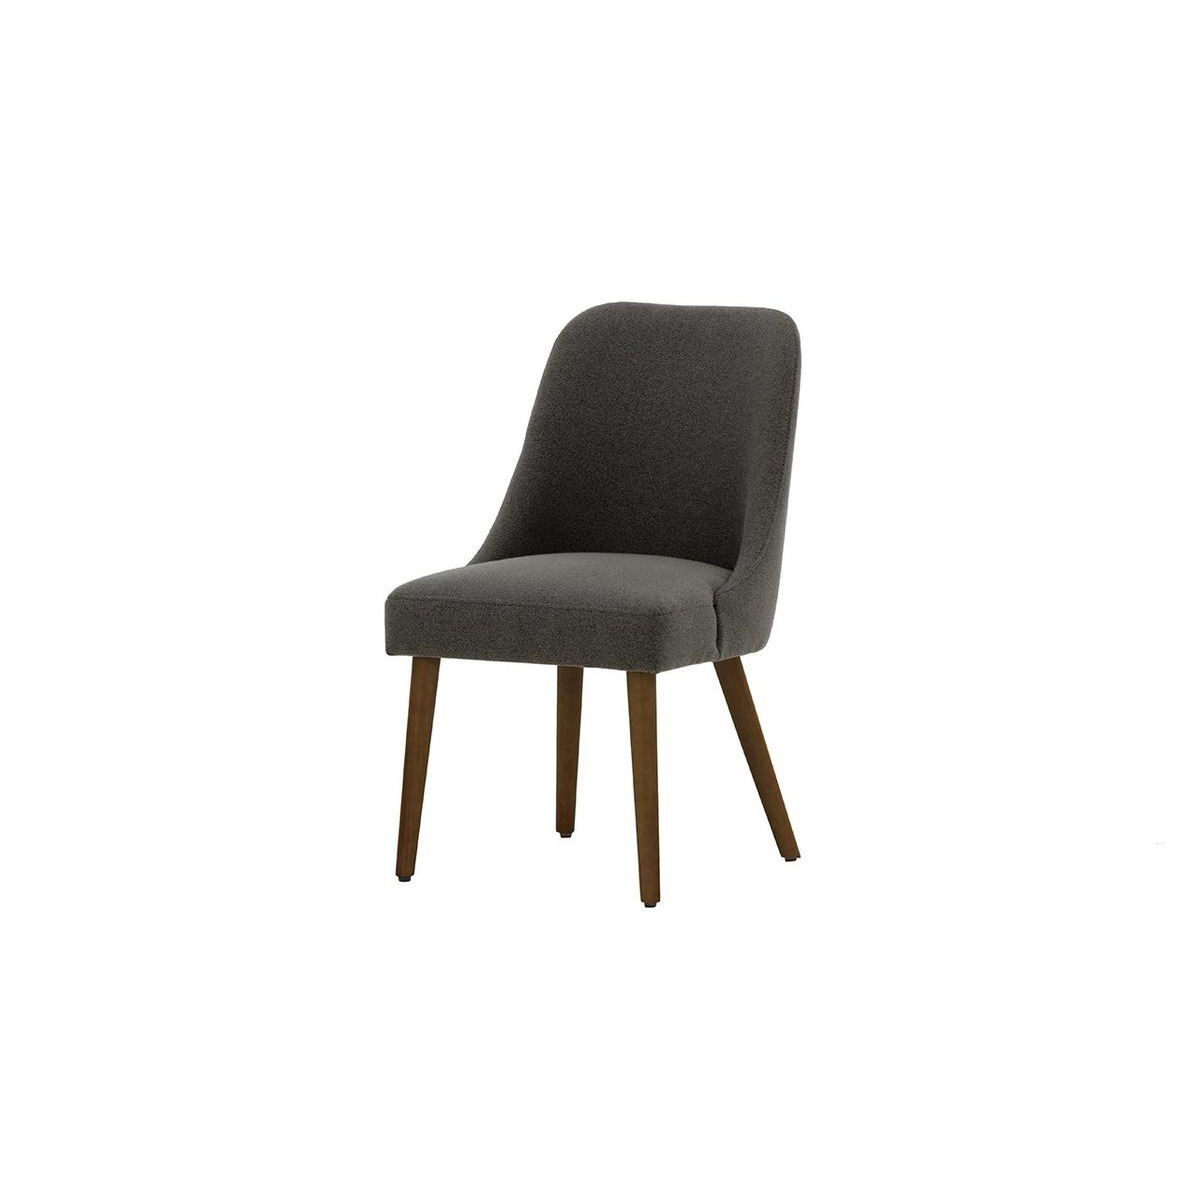 Albion Dining Chair, dark grey, Leg colour: dark oak - image 1